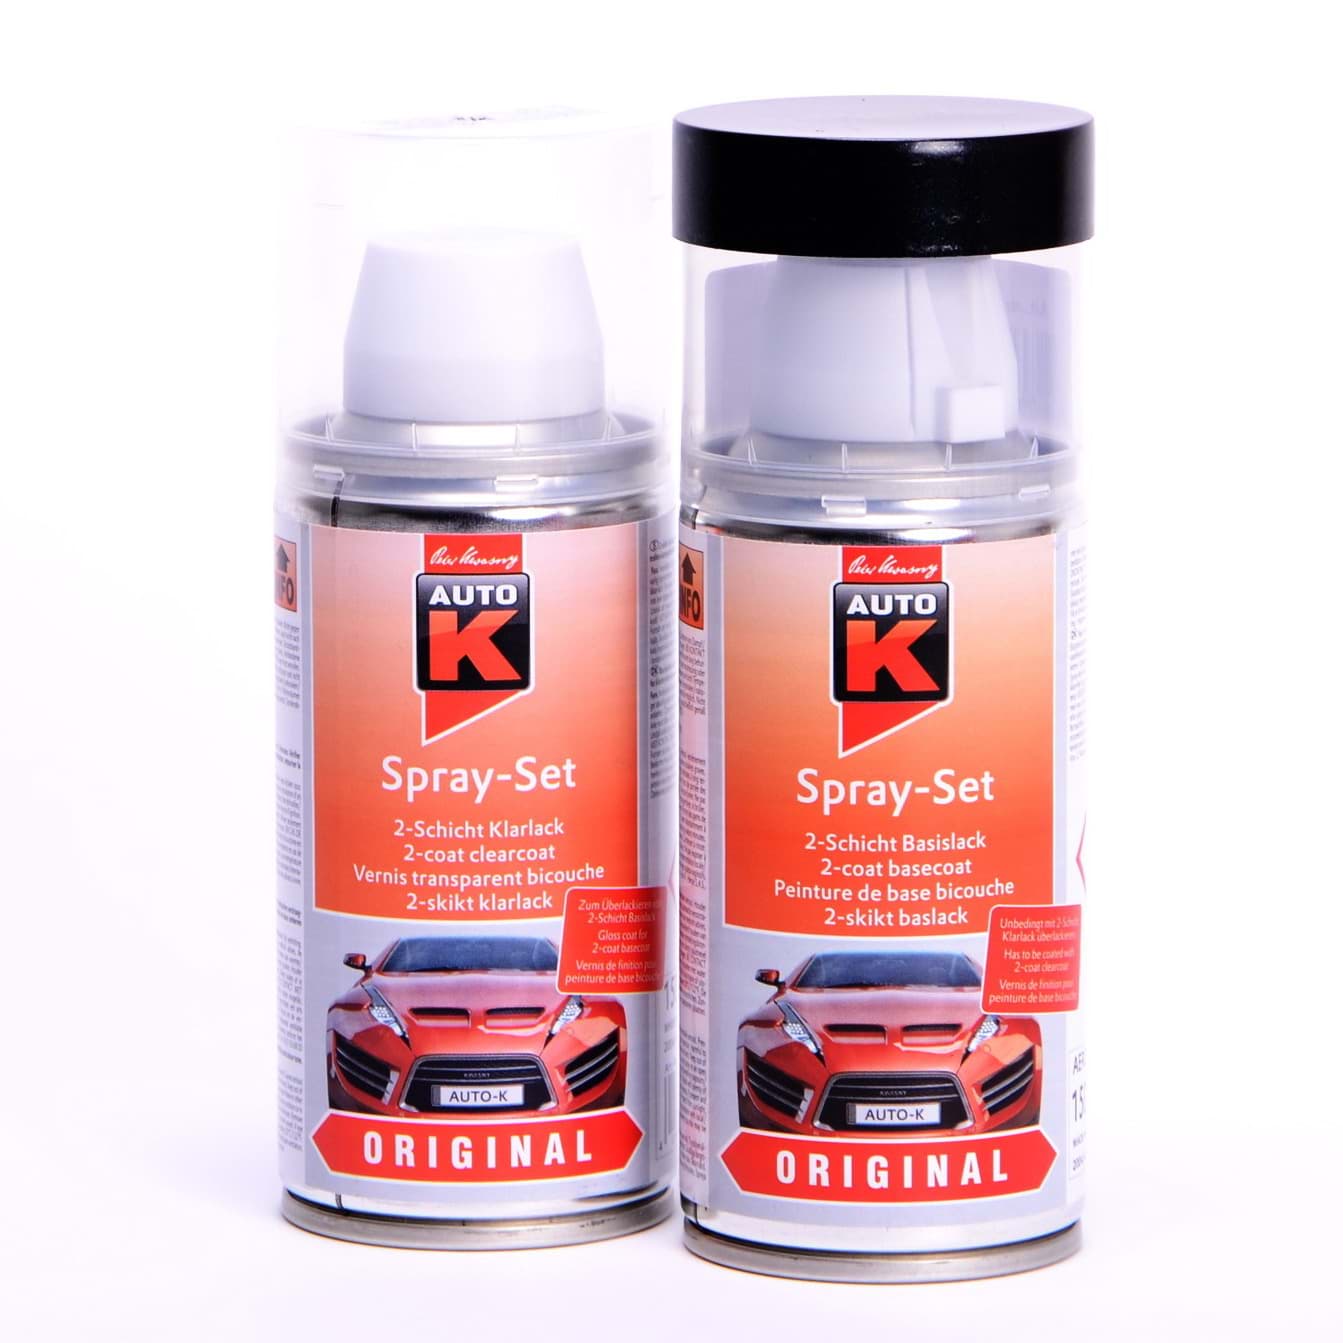 Afbeelding van Auto-K Spray-Set Autolack für Peugeot MOYC Gris Quartz met 42343